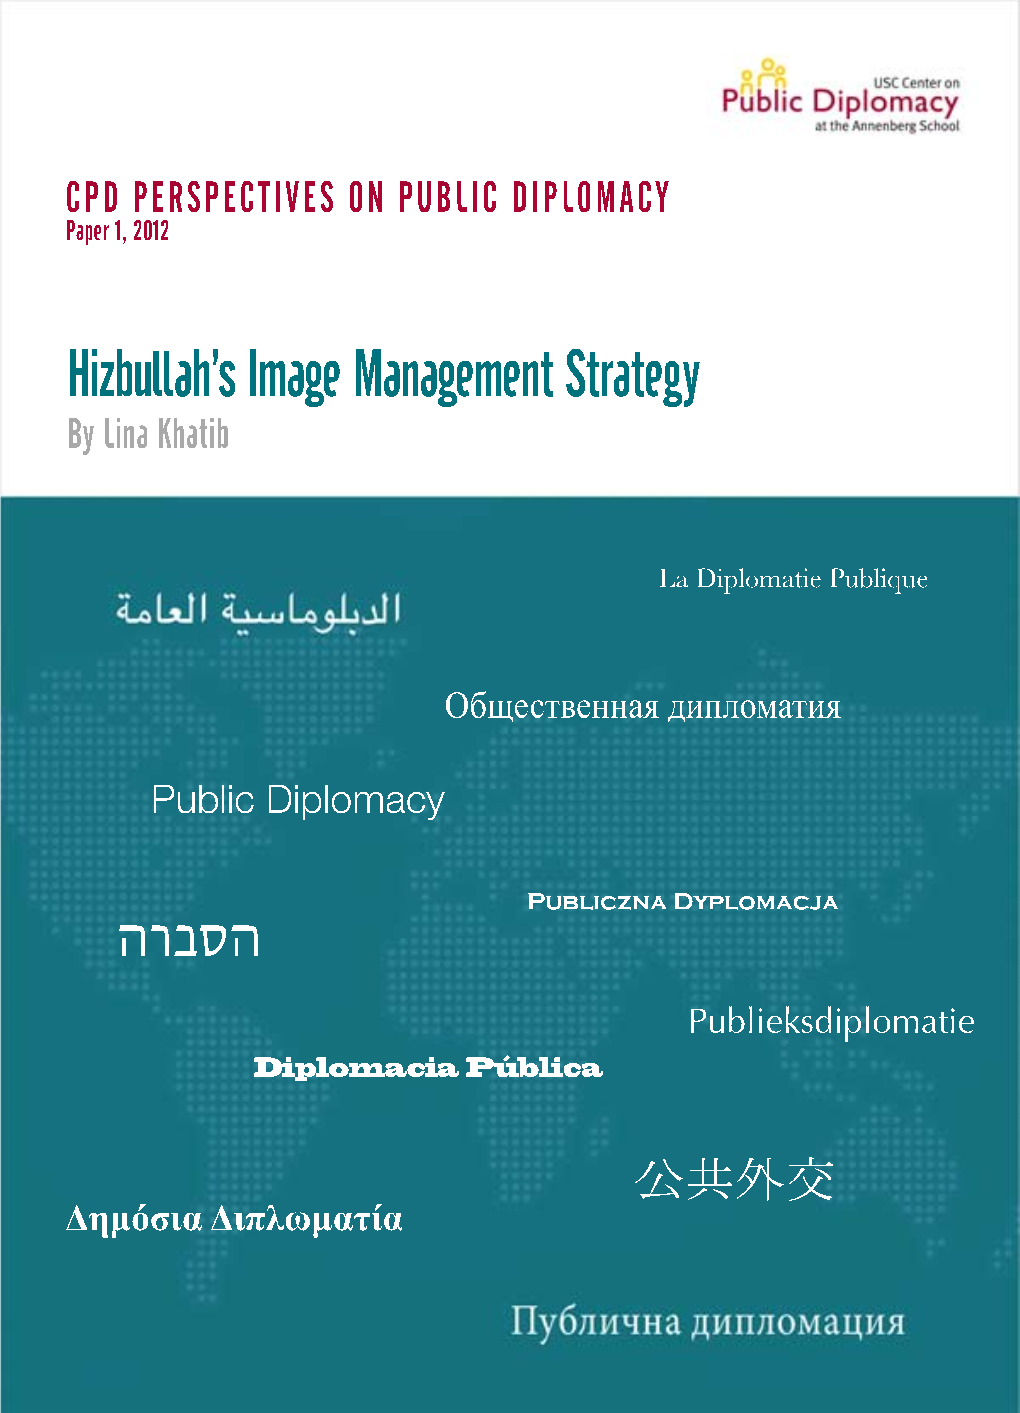 Hizbullah's Image Management Strategy